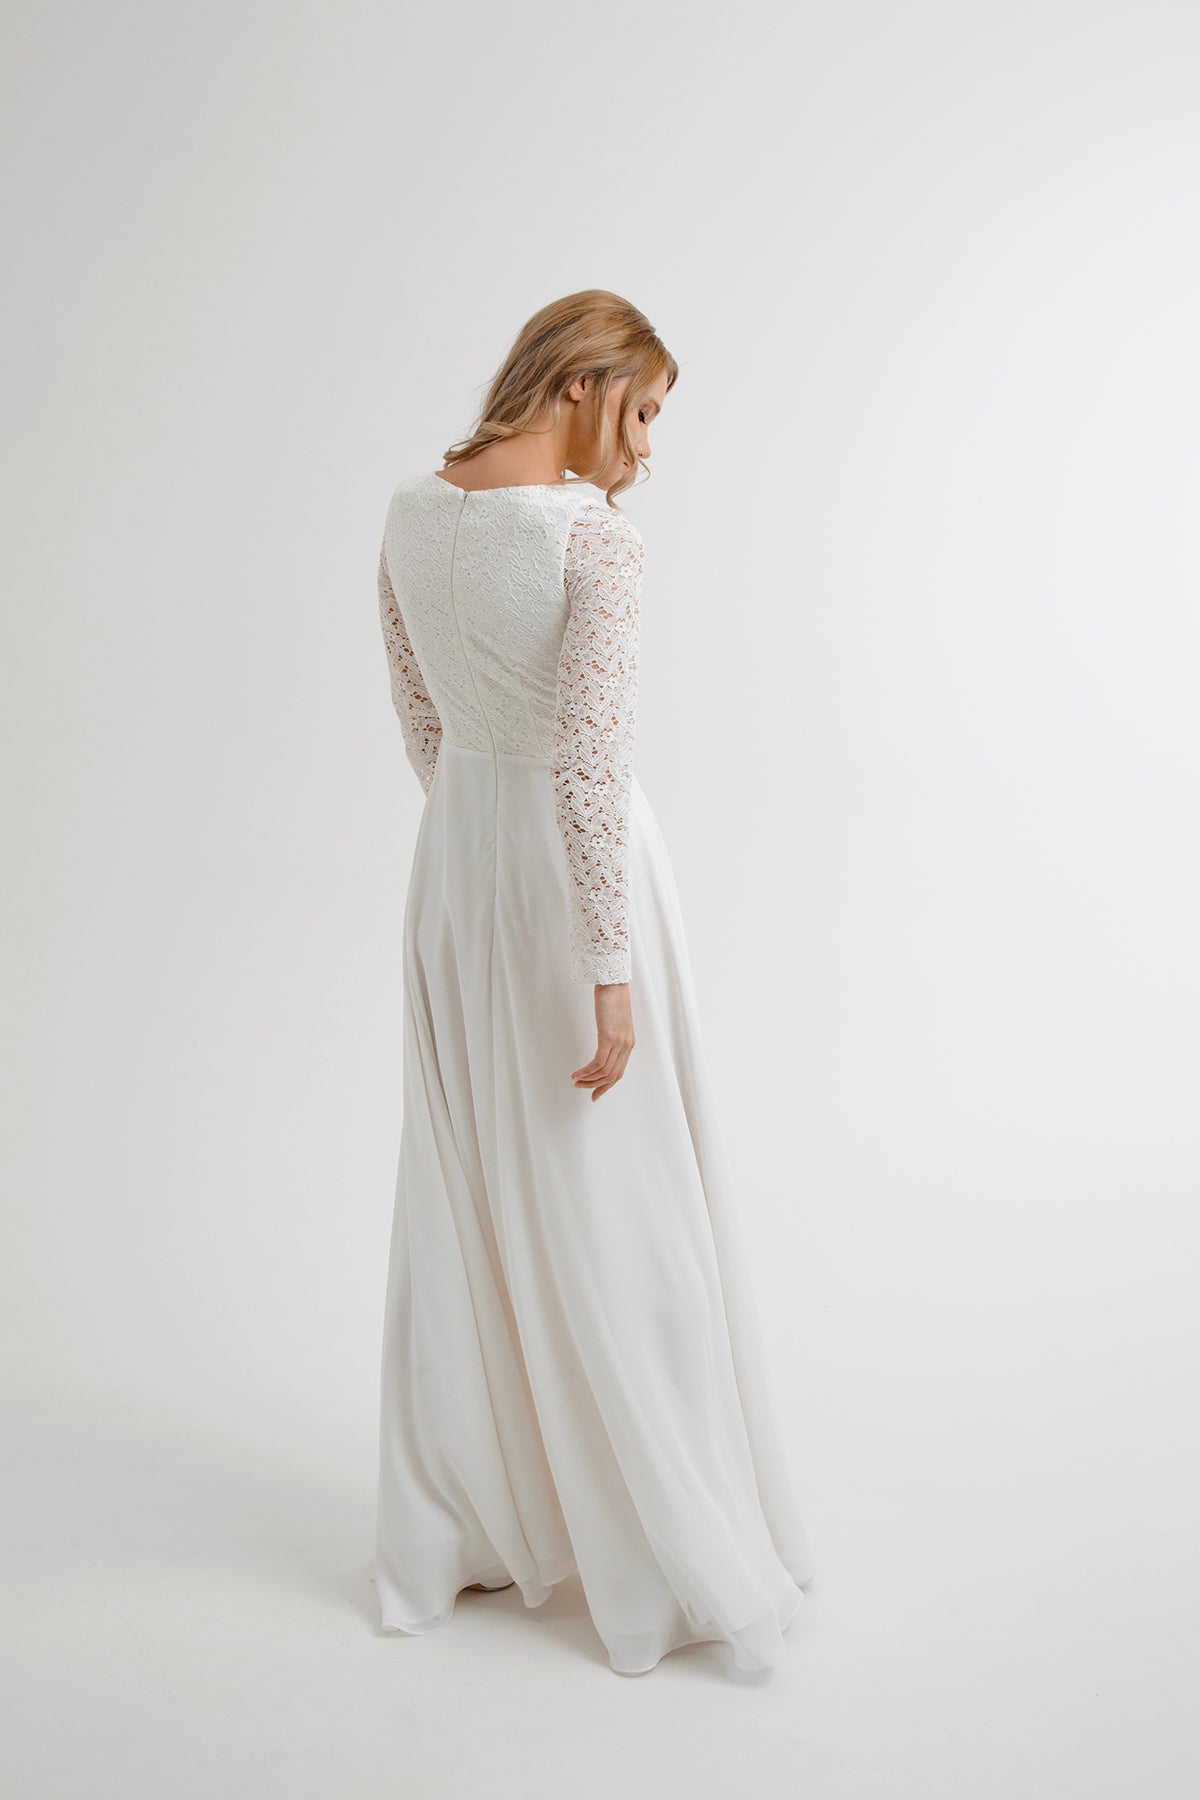 Lace wedding dress • simple wedding dress • long sleeve wedding dress • minimalist wedding dress • elegant bridal gown • modest wedding dress